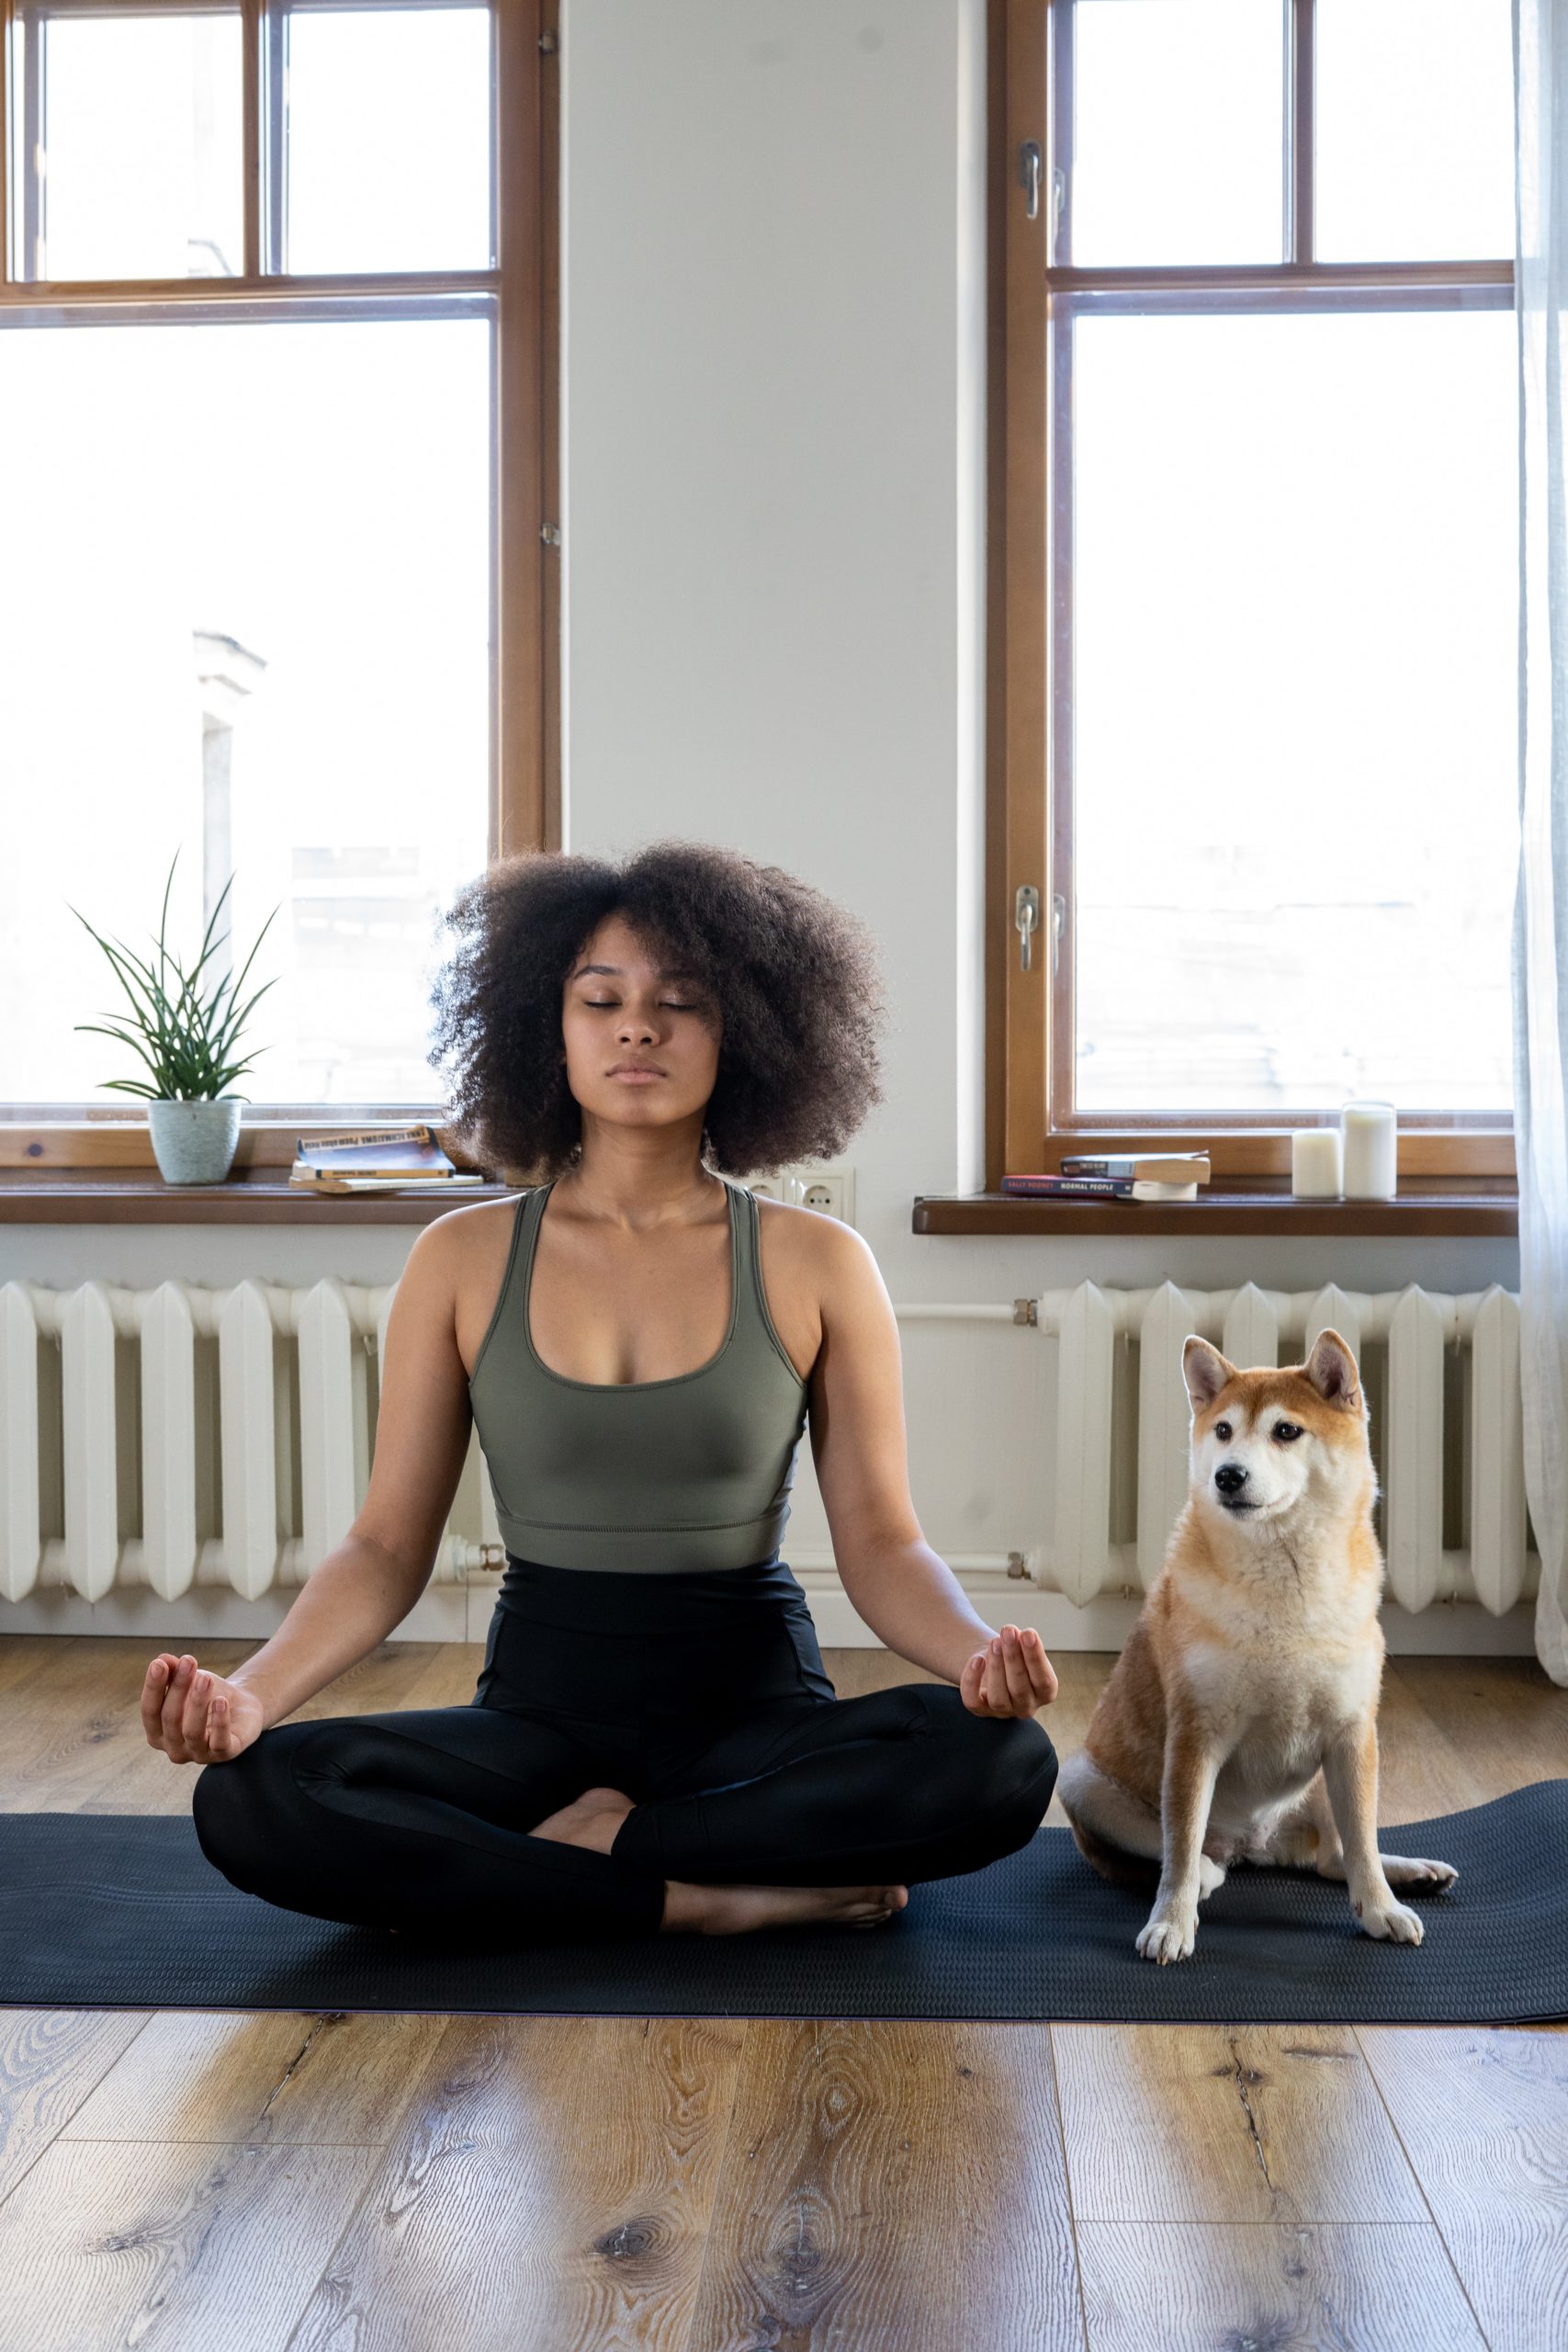 Photo by cottonbro studio: https://www.pexels.com/photo/woman-meditating-beside-her-dog-4056529/